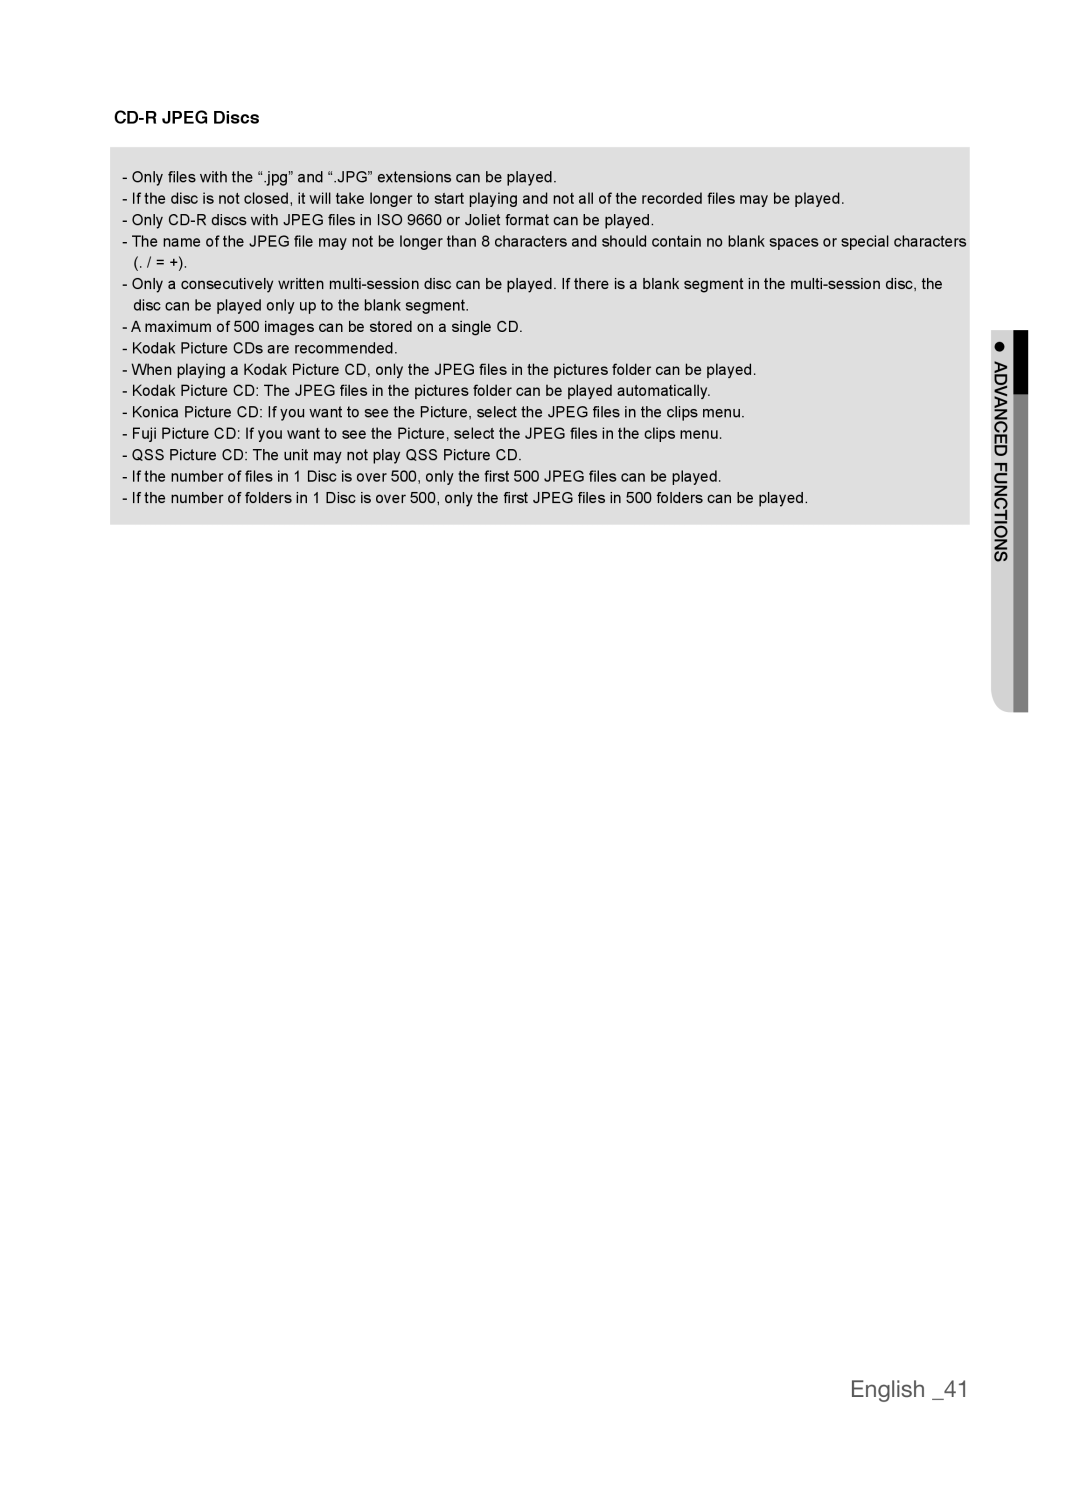 Samsung AK68-01770G, DVD-P390 user manual English, CD-R JPEG Discs 